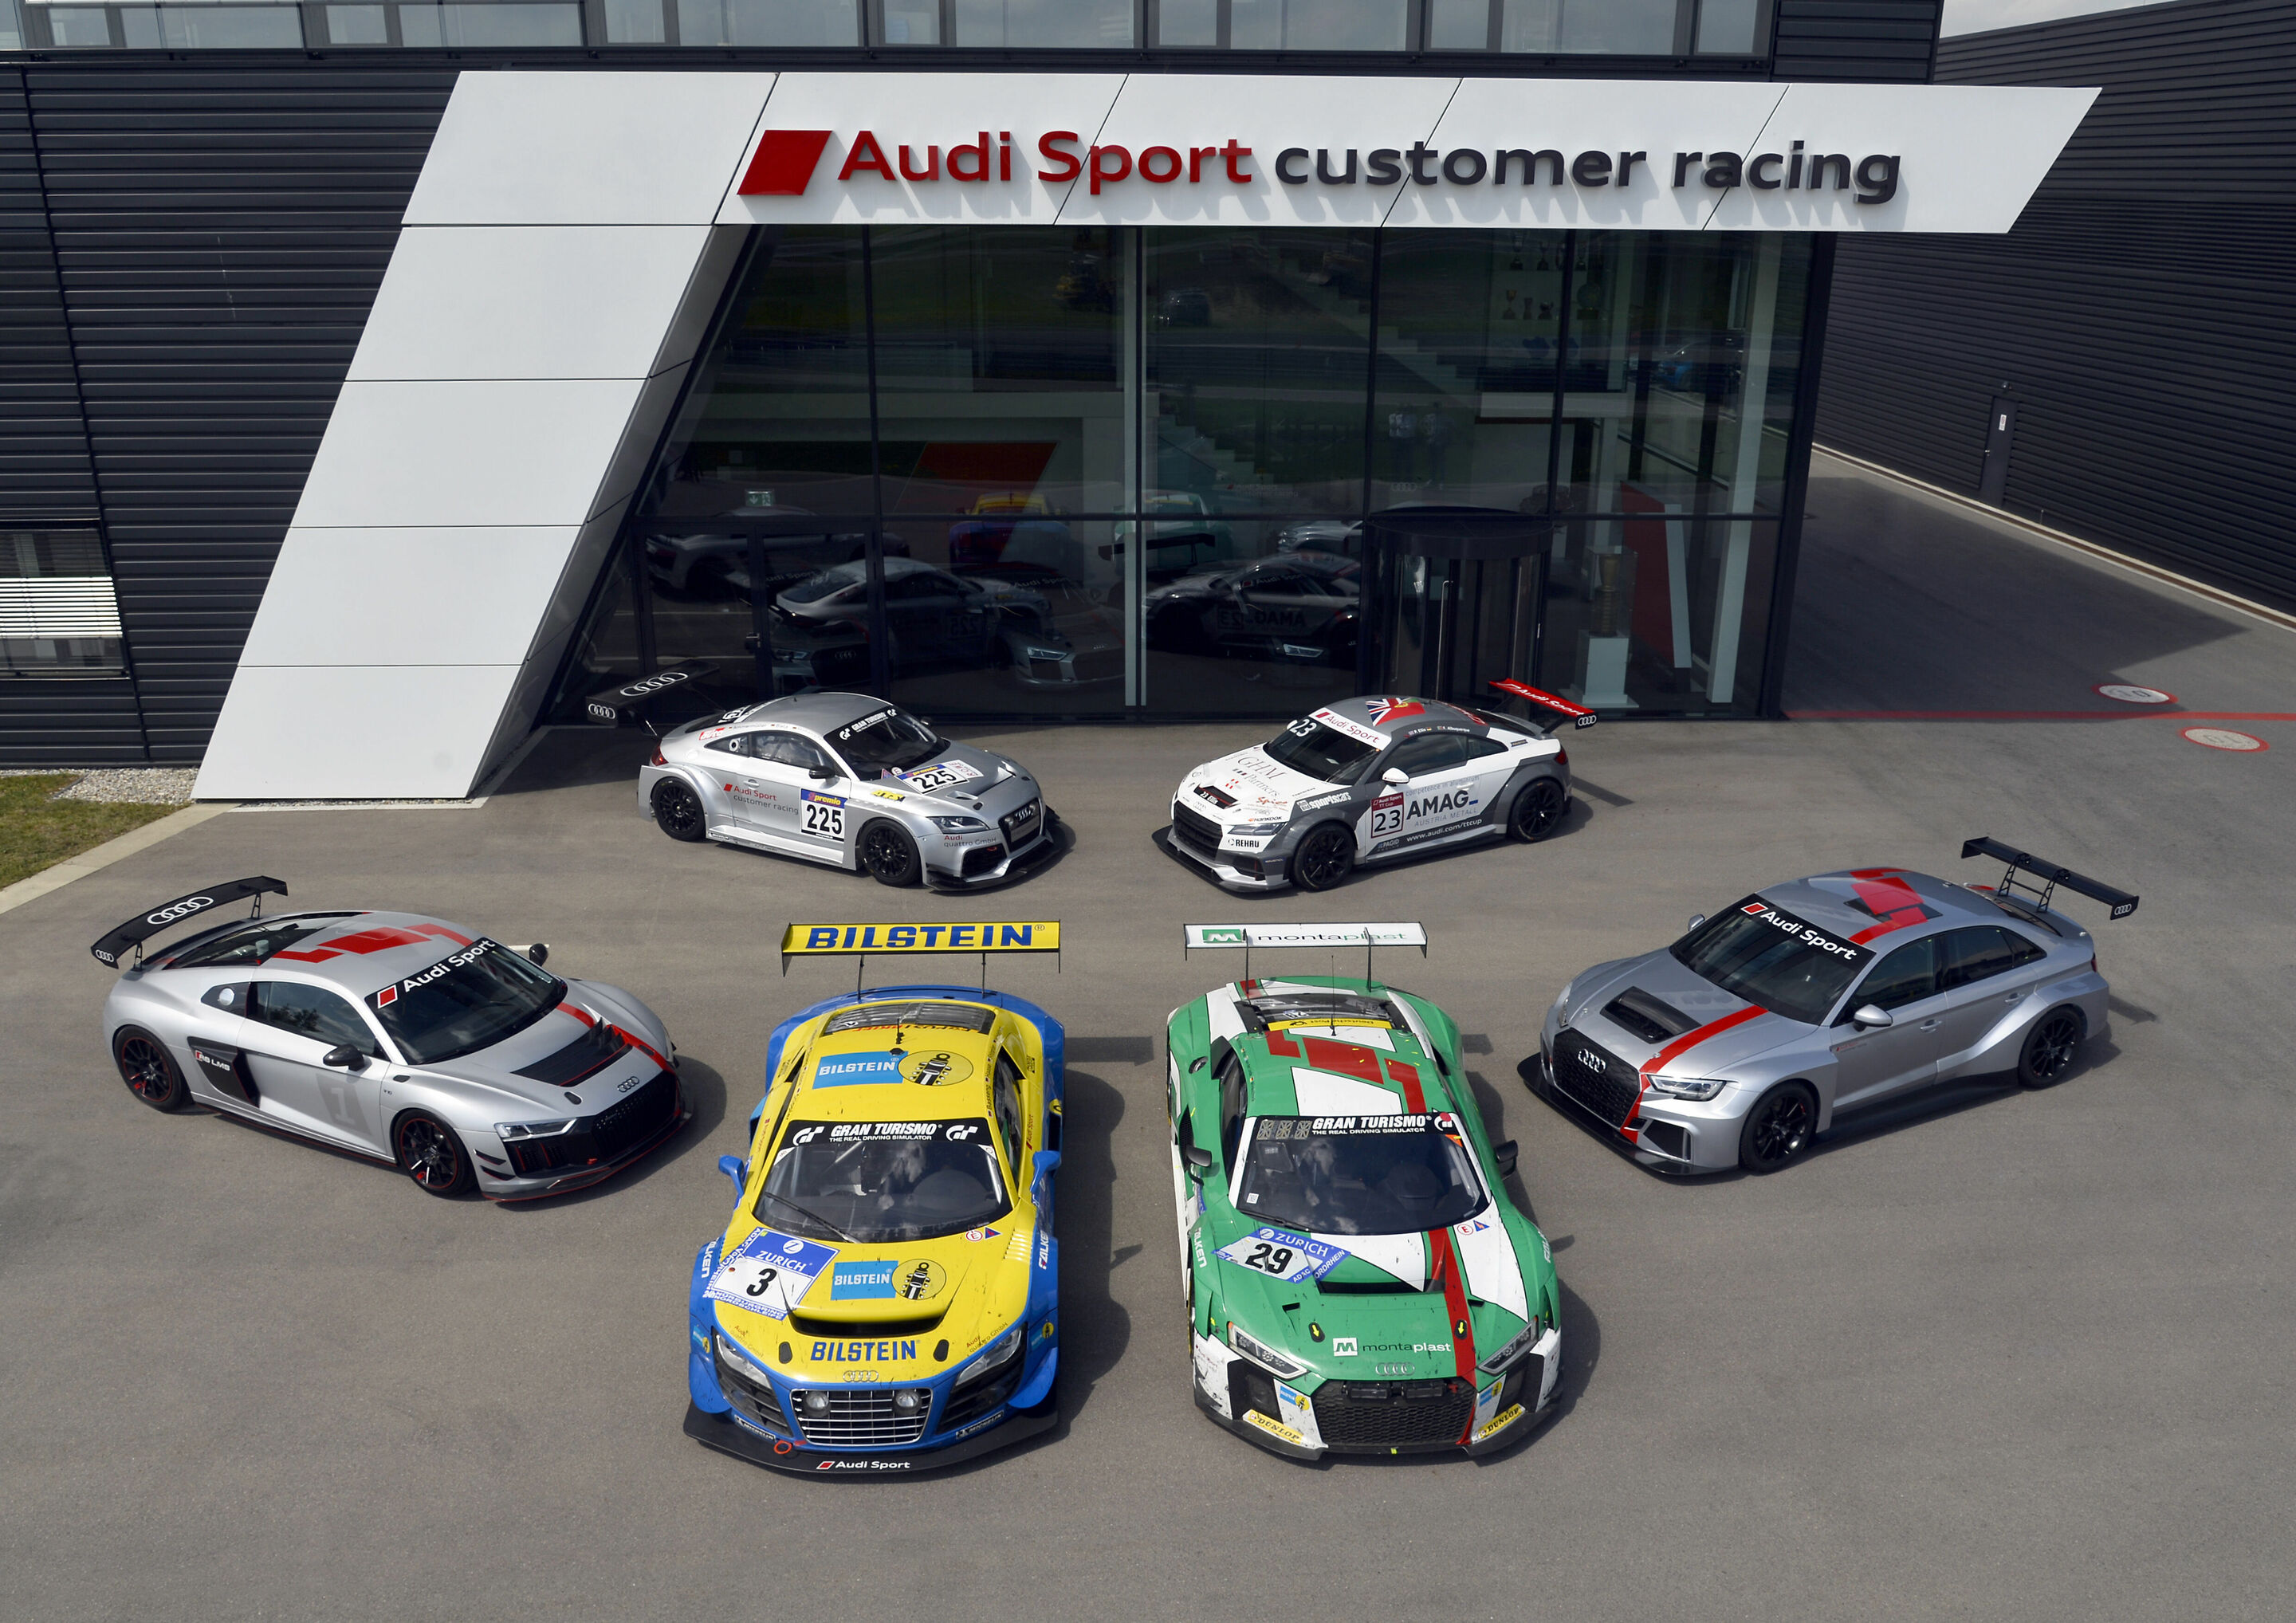 Ten years of Audi Sport customer racing